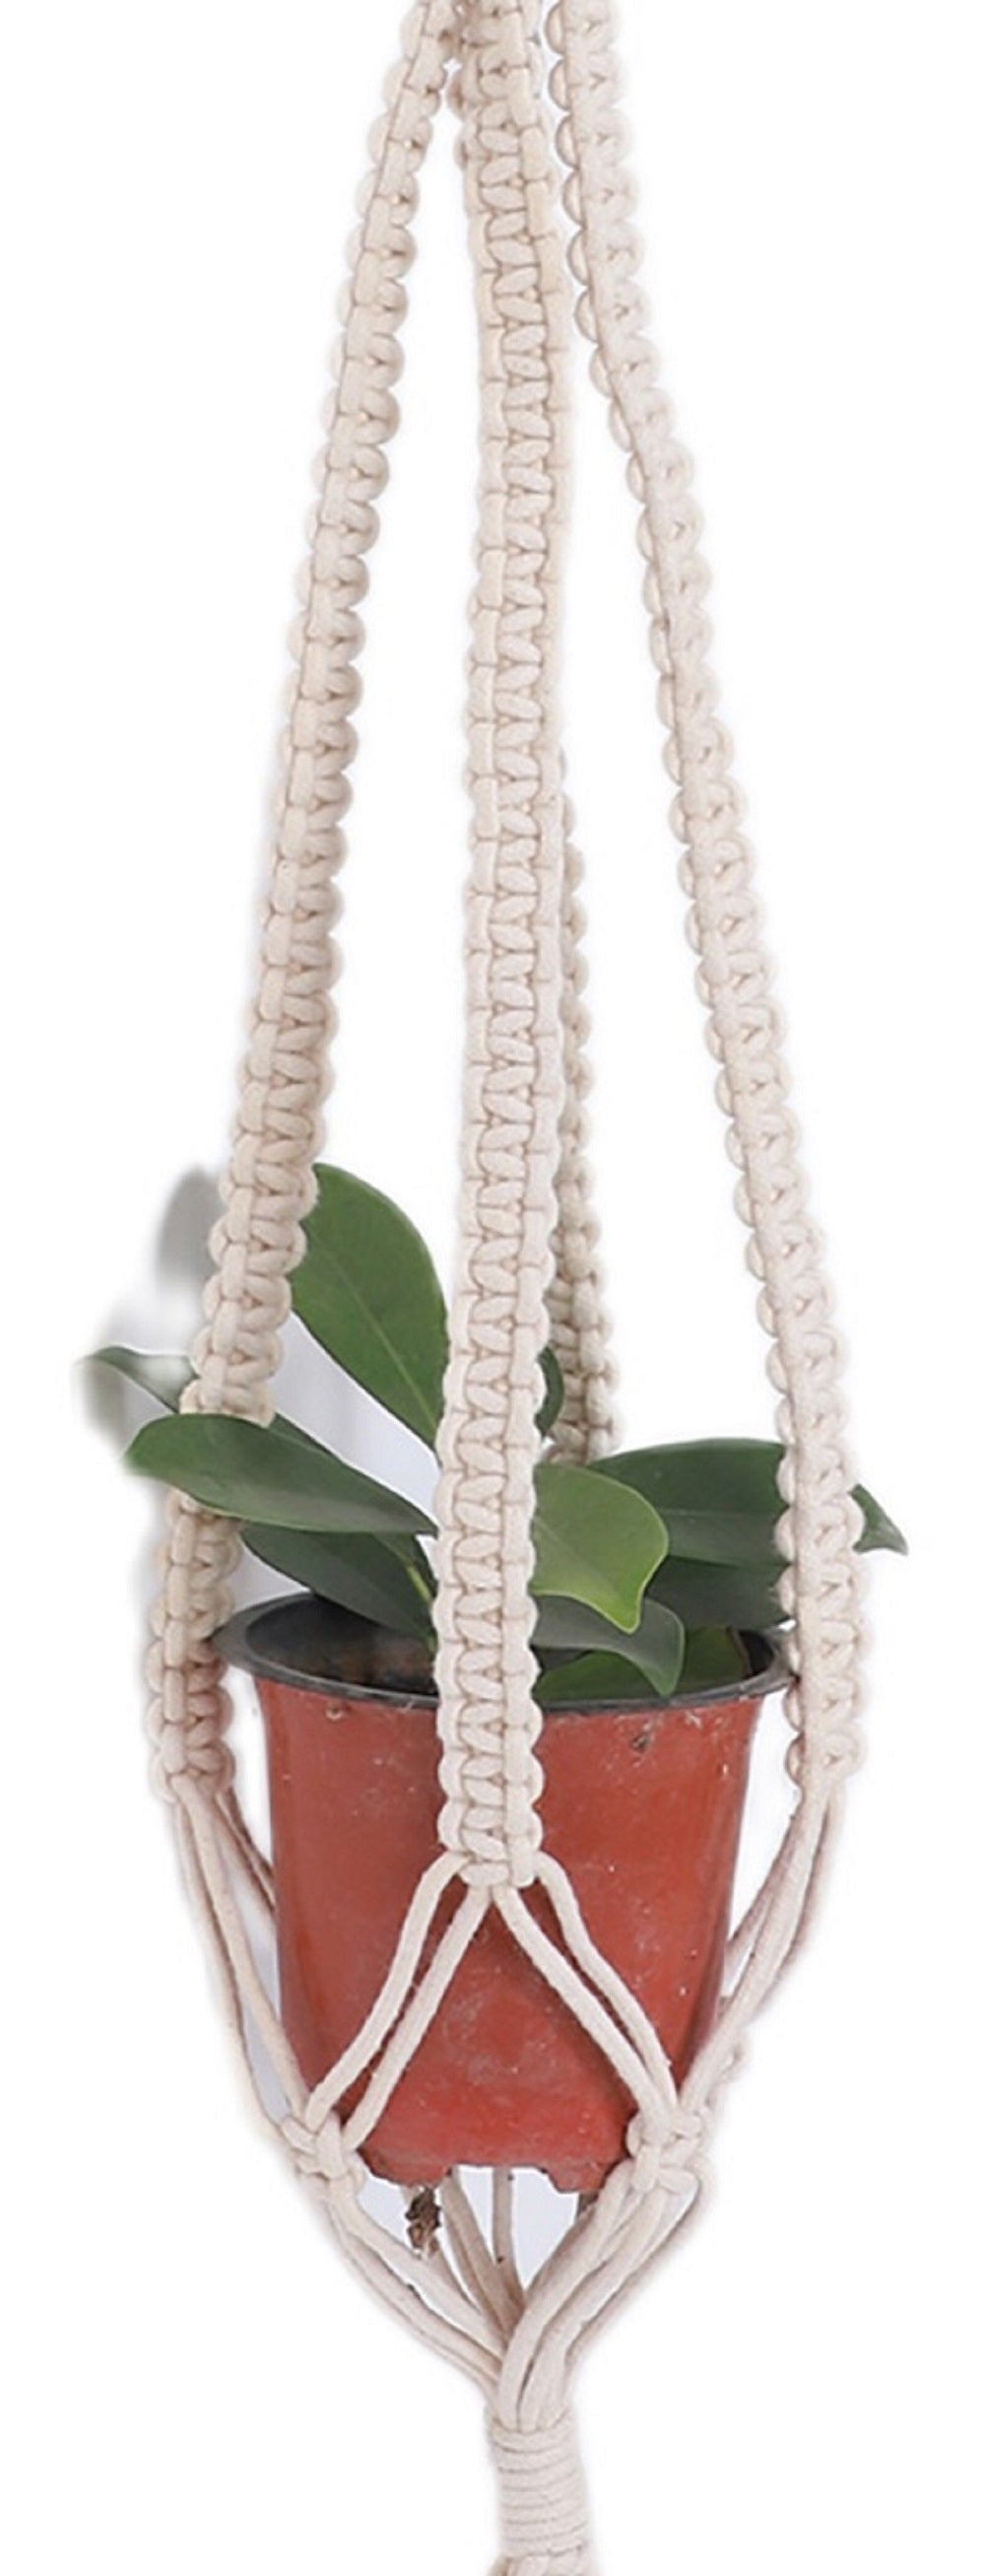 NUEVOSGHAR Macrame Plant Hanger| Boho 2 Teir Plant Holder| Hand Made Crochet Plant Holder|Indoor-Outdoor Wall Hanging Plant Holder| Beige-Maroon